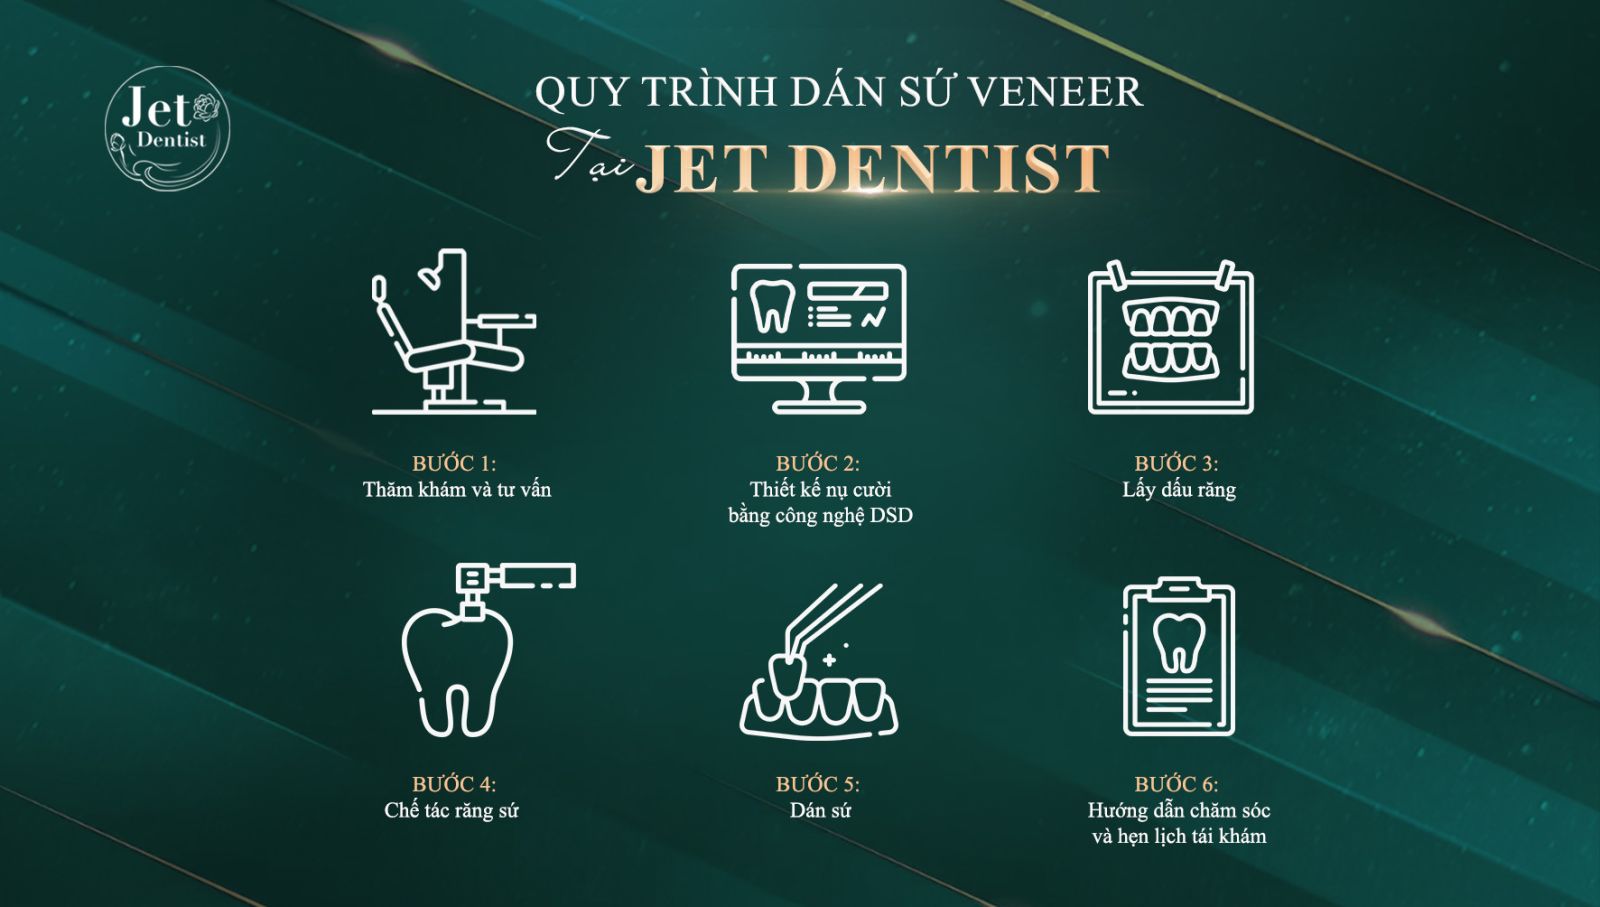 quy-trinh-dan-su-veneer-tai-jet-dentist